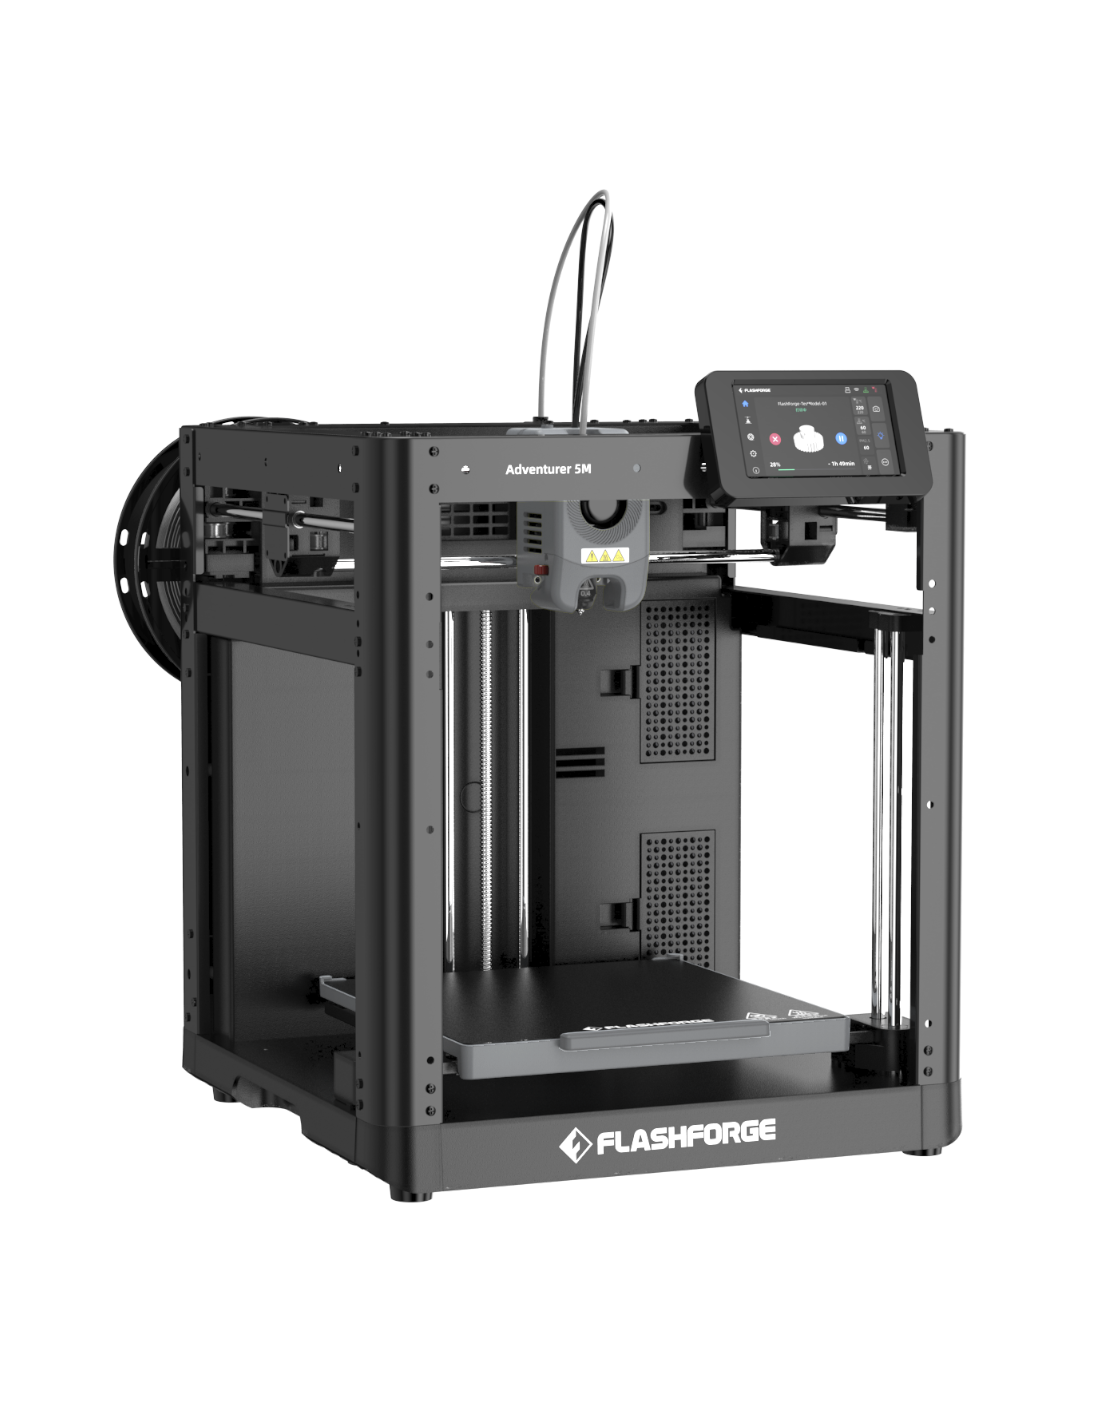 Flashforge Adventurer 5M - 3D-printer